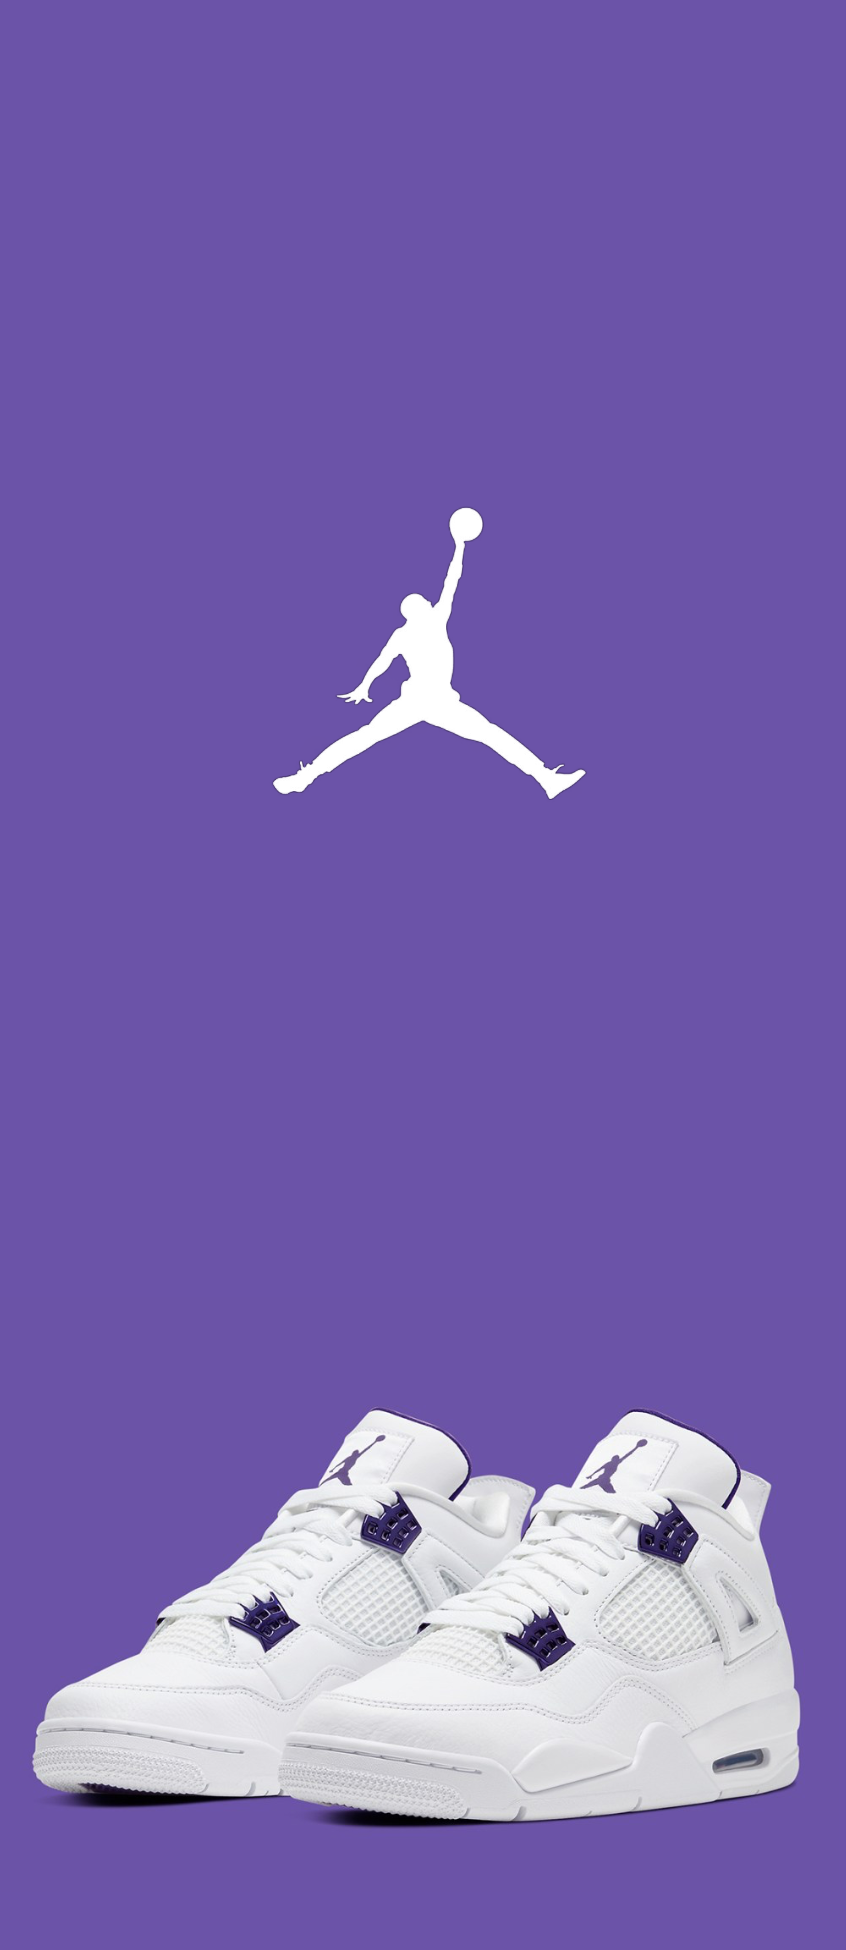 Jordan 4 métallic purple. iPhone wallpaper jordan, Jordan logo wallpaper, Nike wallpaper